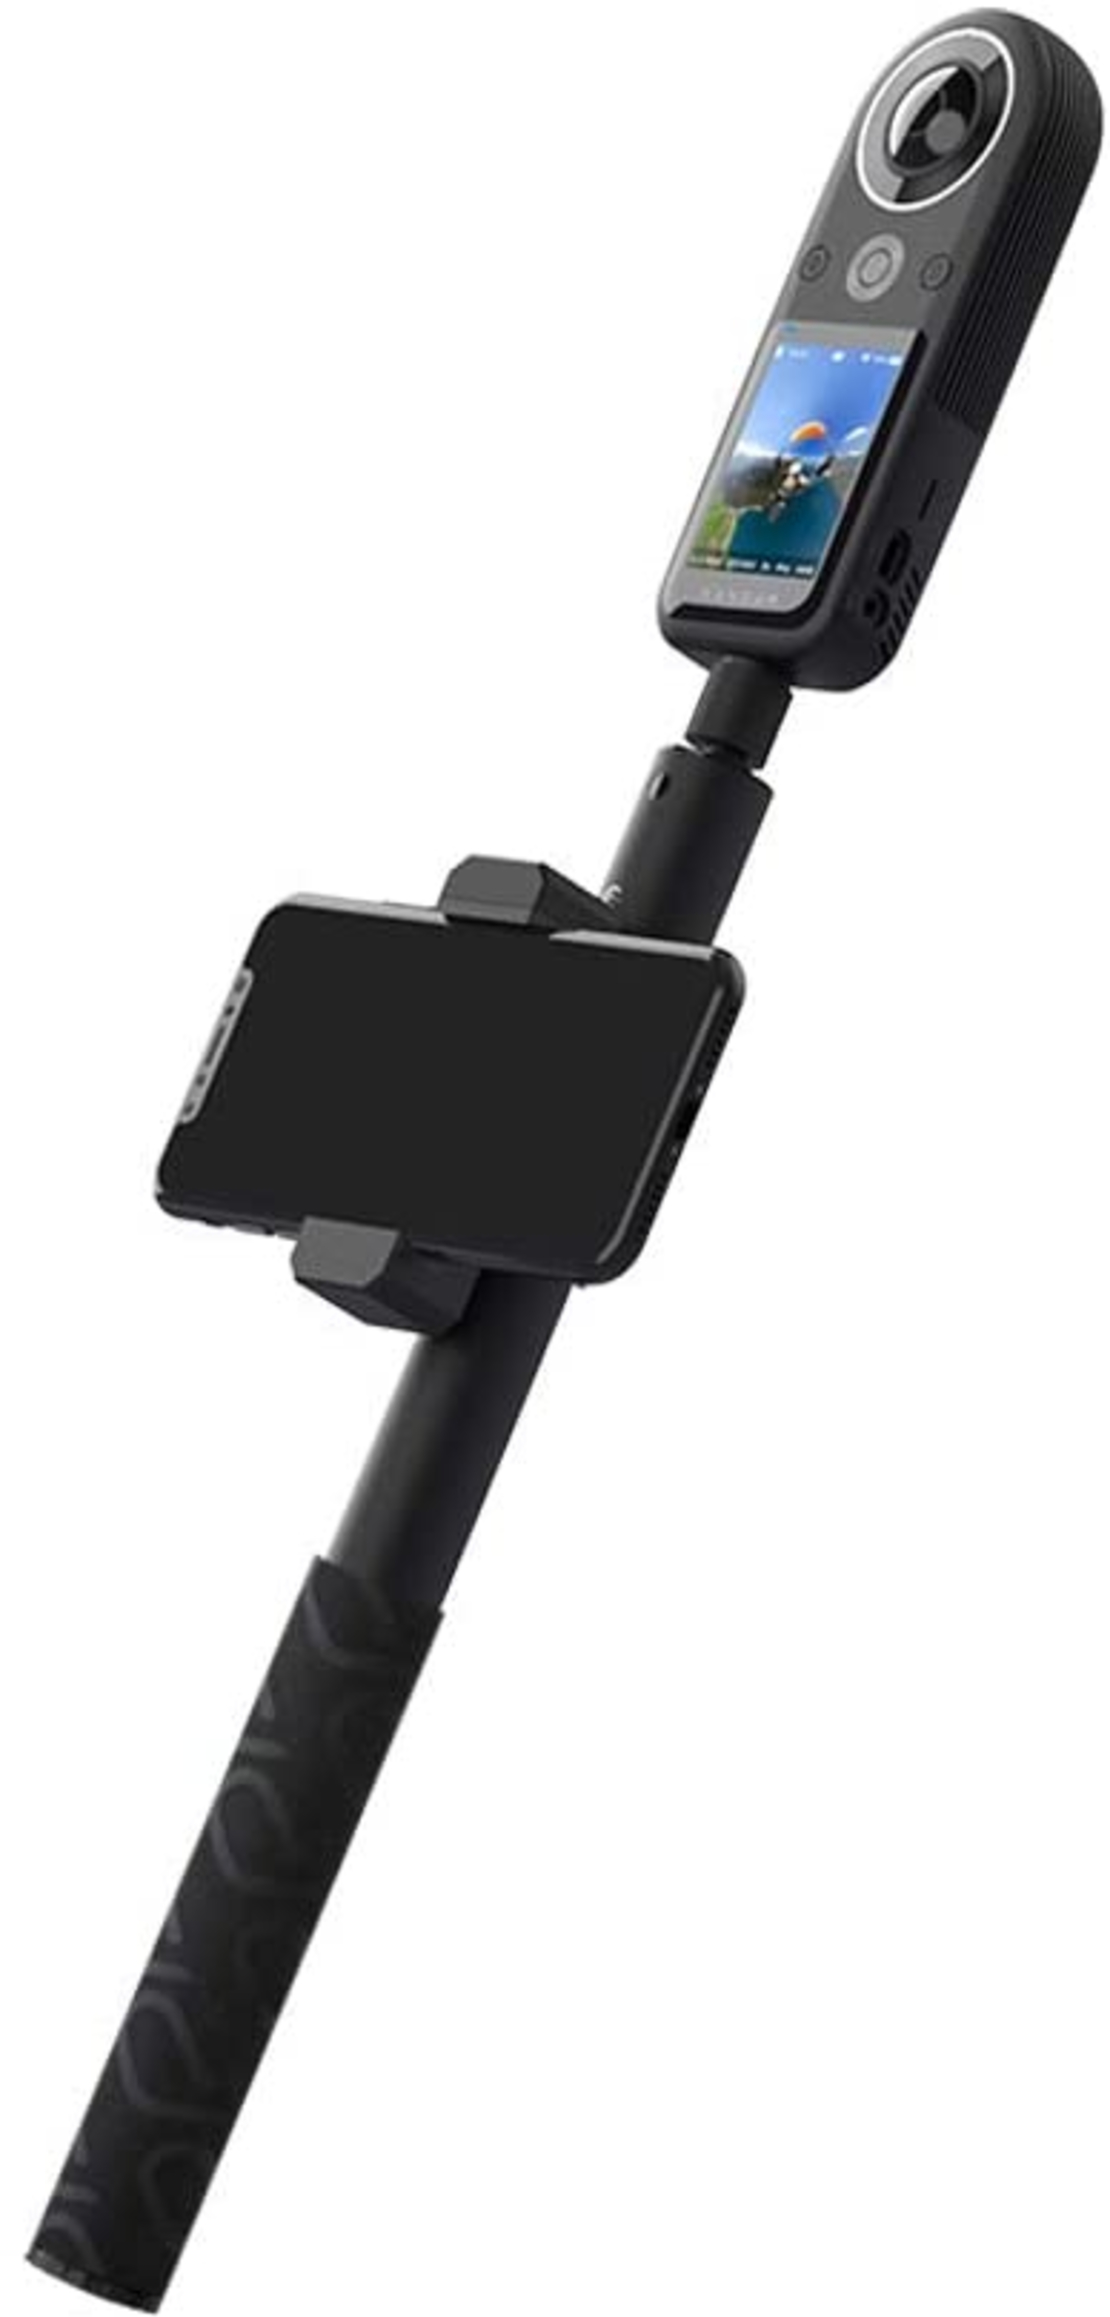  8KSS Selfie Stick - מוט סלפי ל Kandao Qoocam 8K